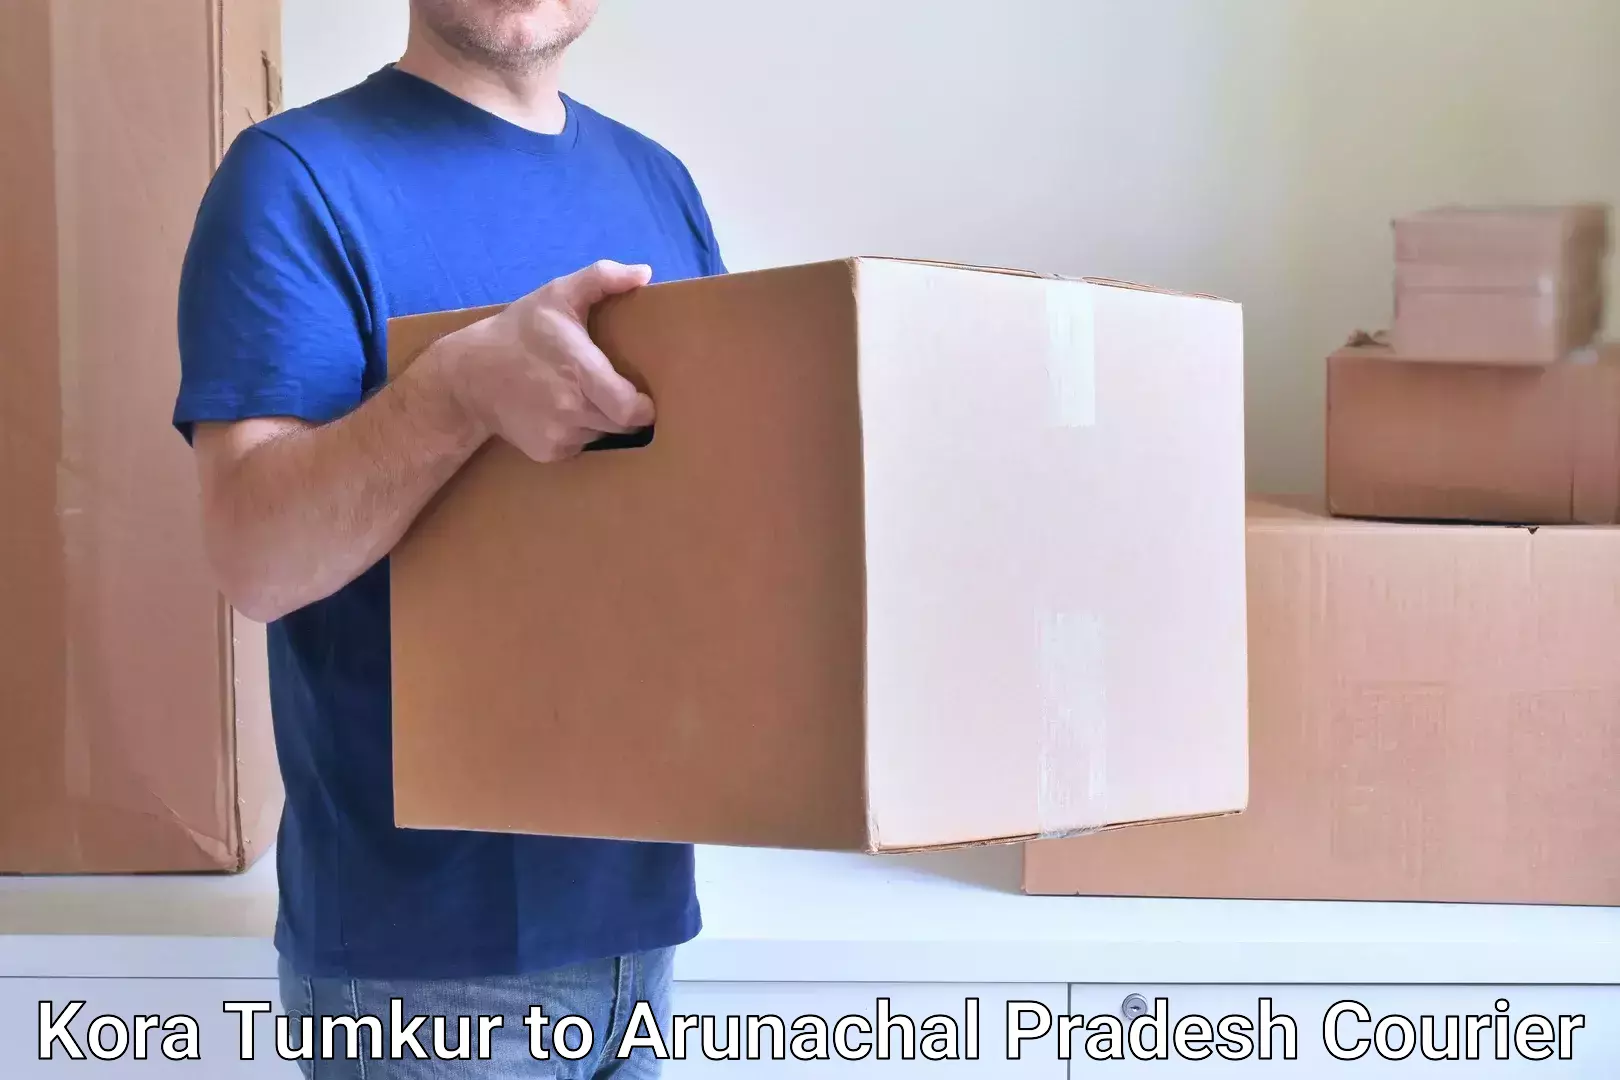 Personalized courier experiences in Kora Tumkur to Arunachal Pradesh